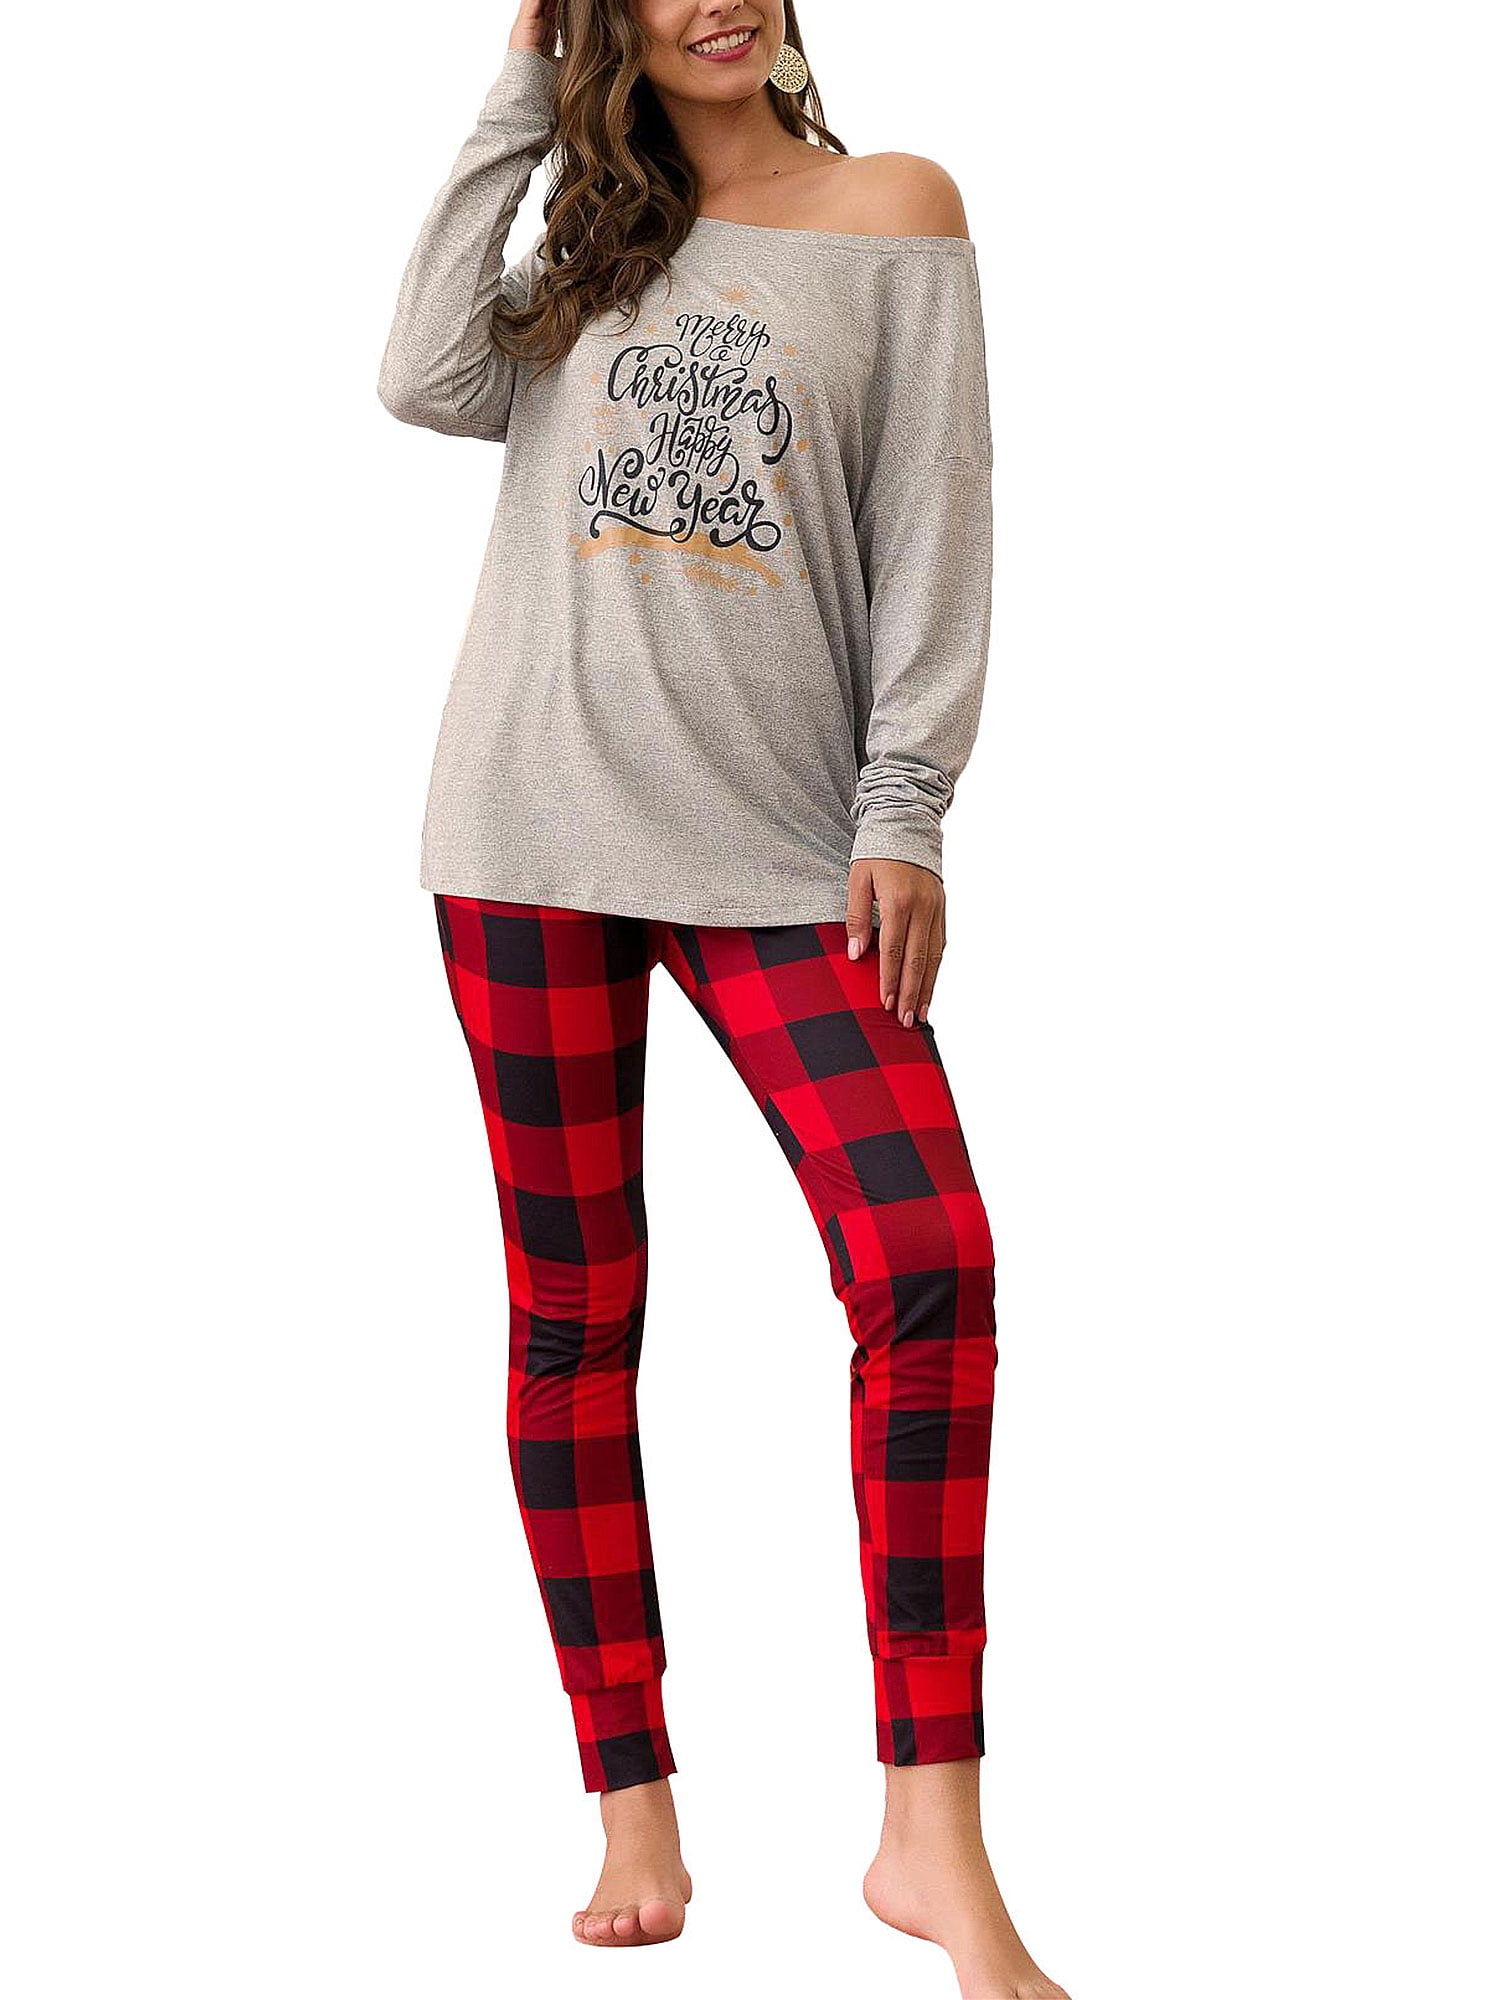 Cromoncent Girls 2PCS Long-Sleeve Sleepwear Xmas Shirt Pajama Sets